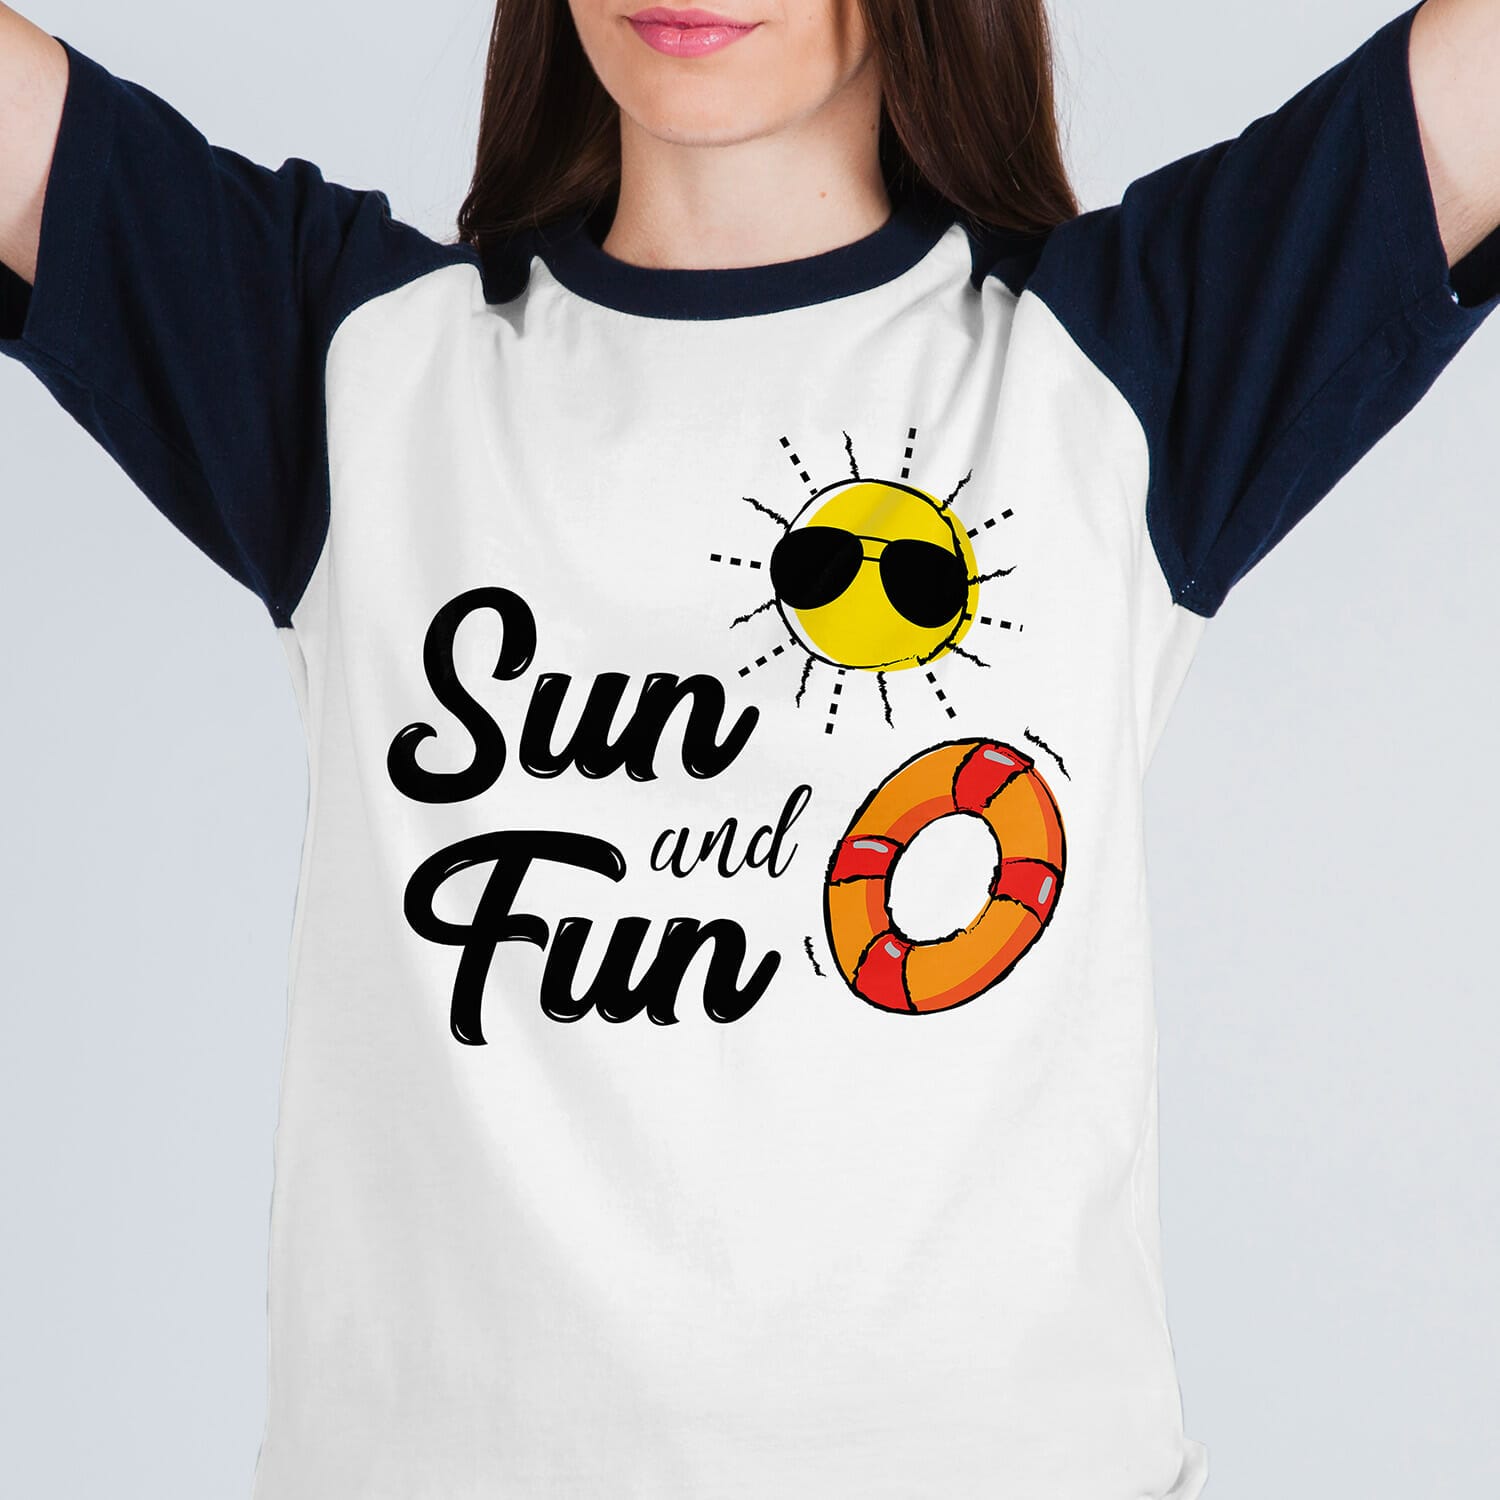 Sun and fun tshirt design for summer